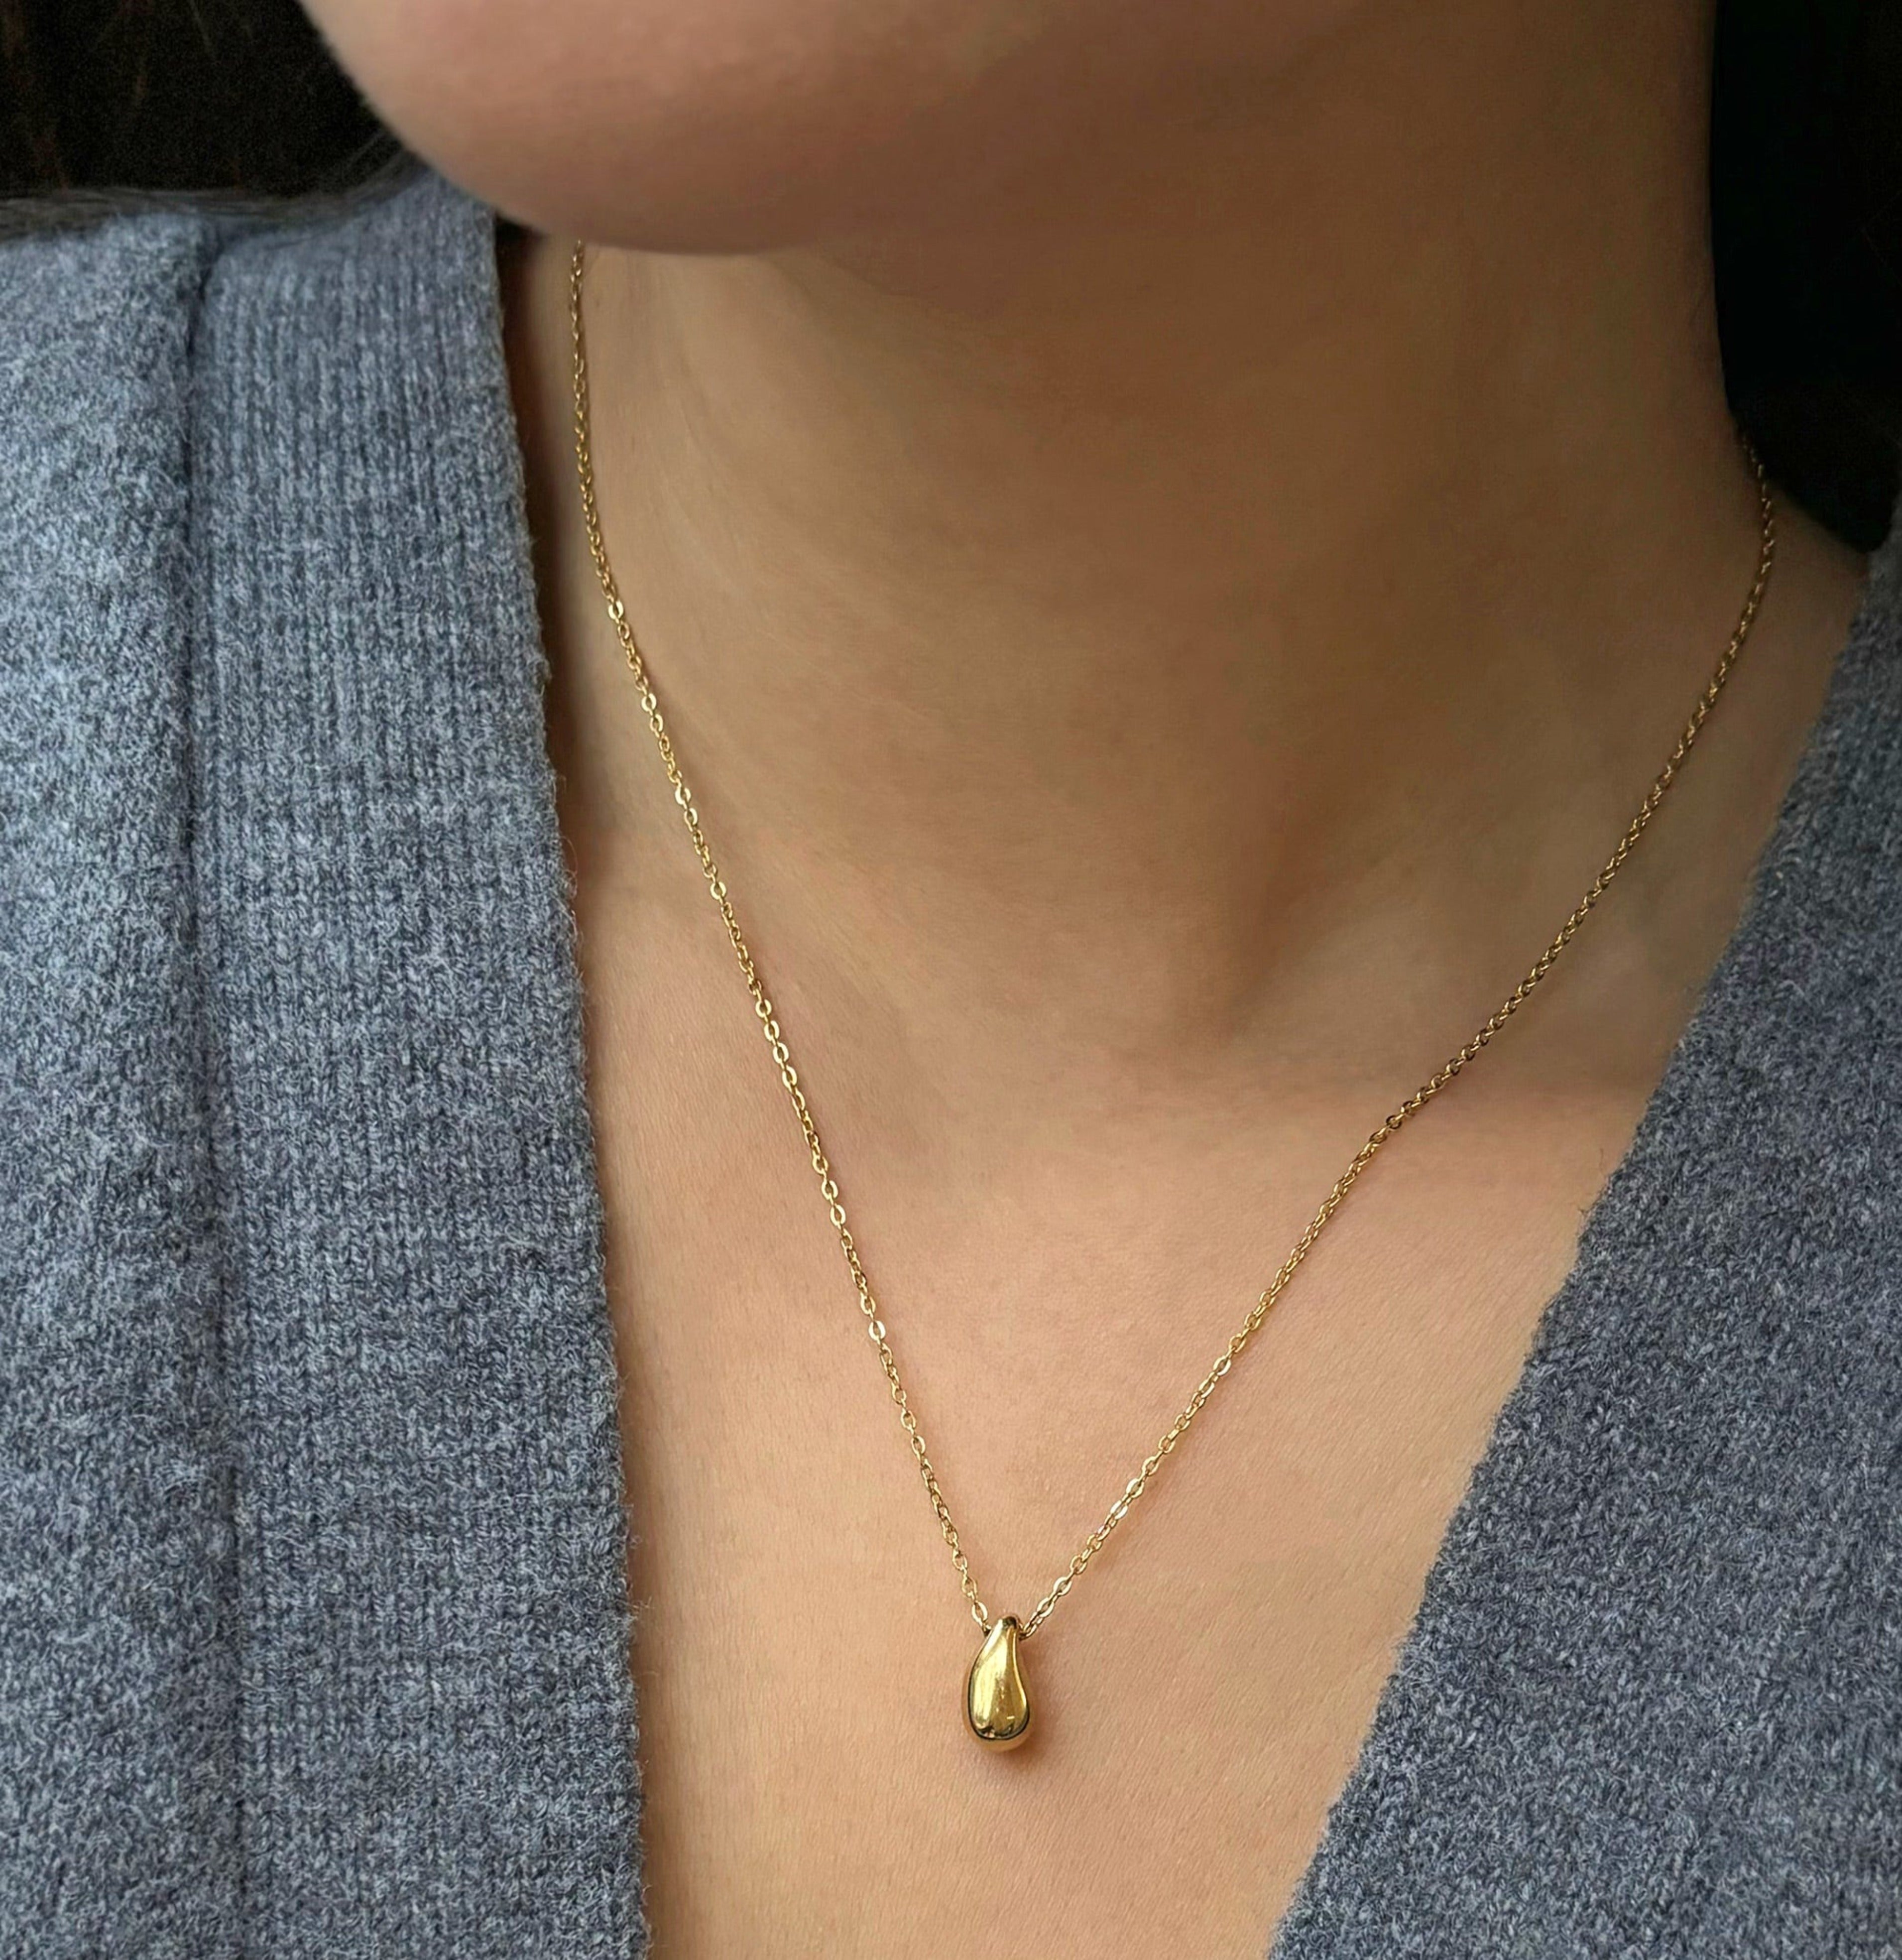 gold tear drop pendant necklace waterproof necklace